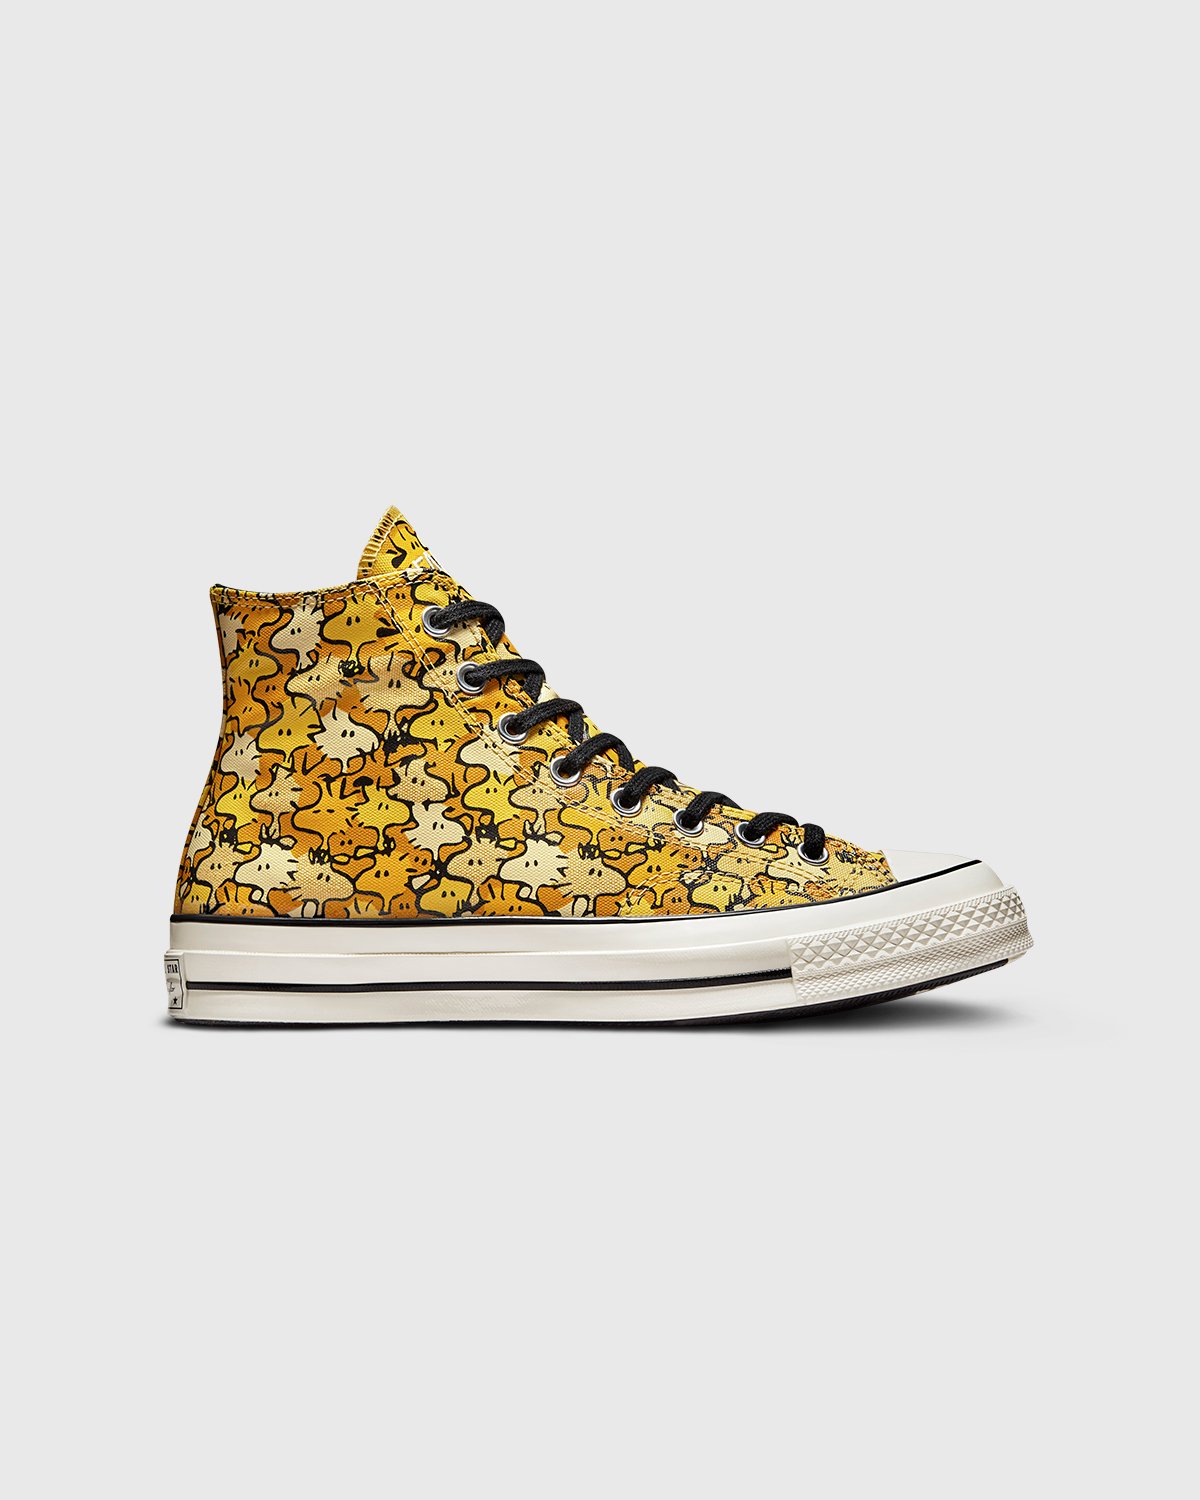 Converse x Peanuts - Chuck 70 Hi Soba/Zinc Yellow/Topaz Gold - Footwear - Yellow - Image 1